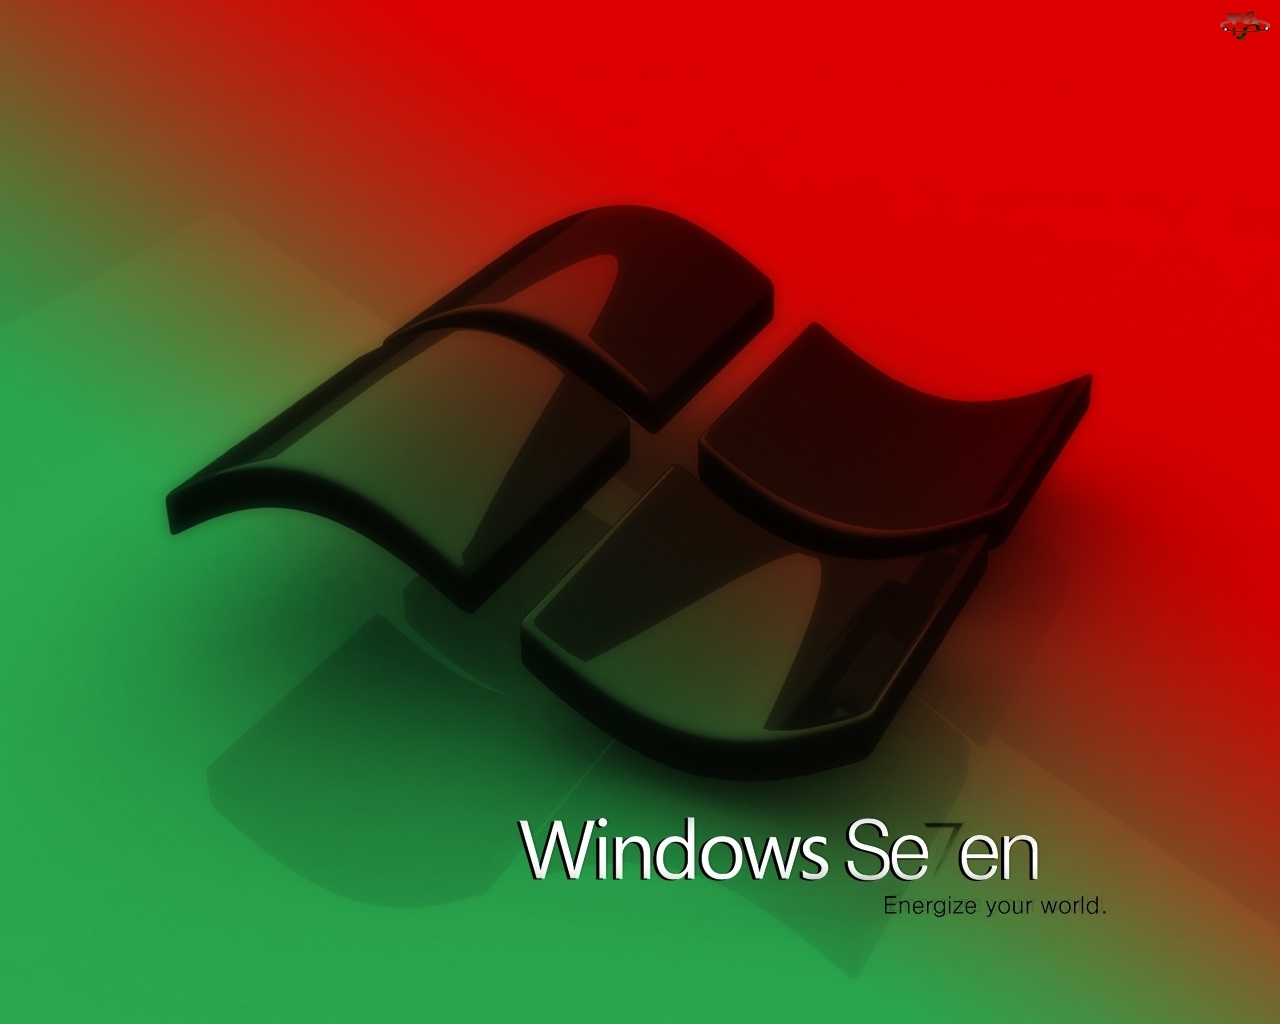 Okna, Windows, Seven